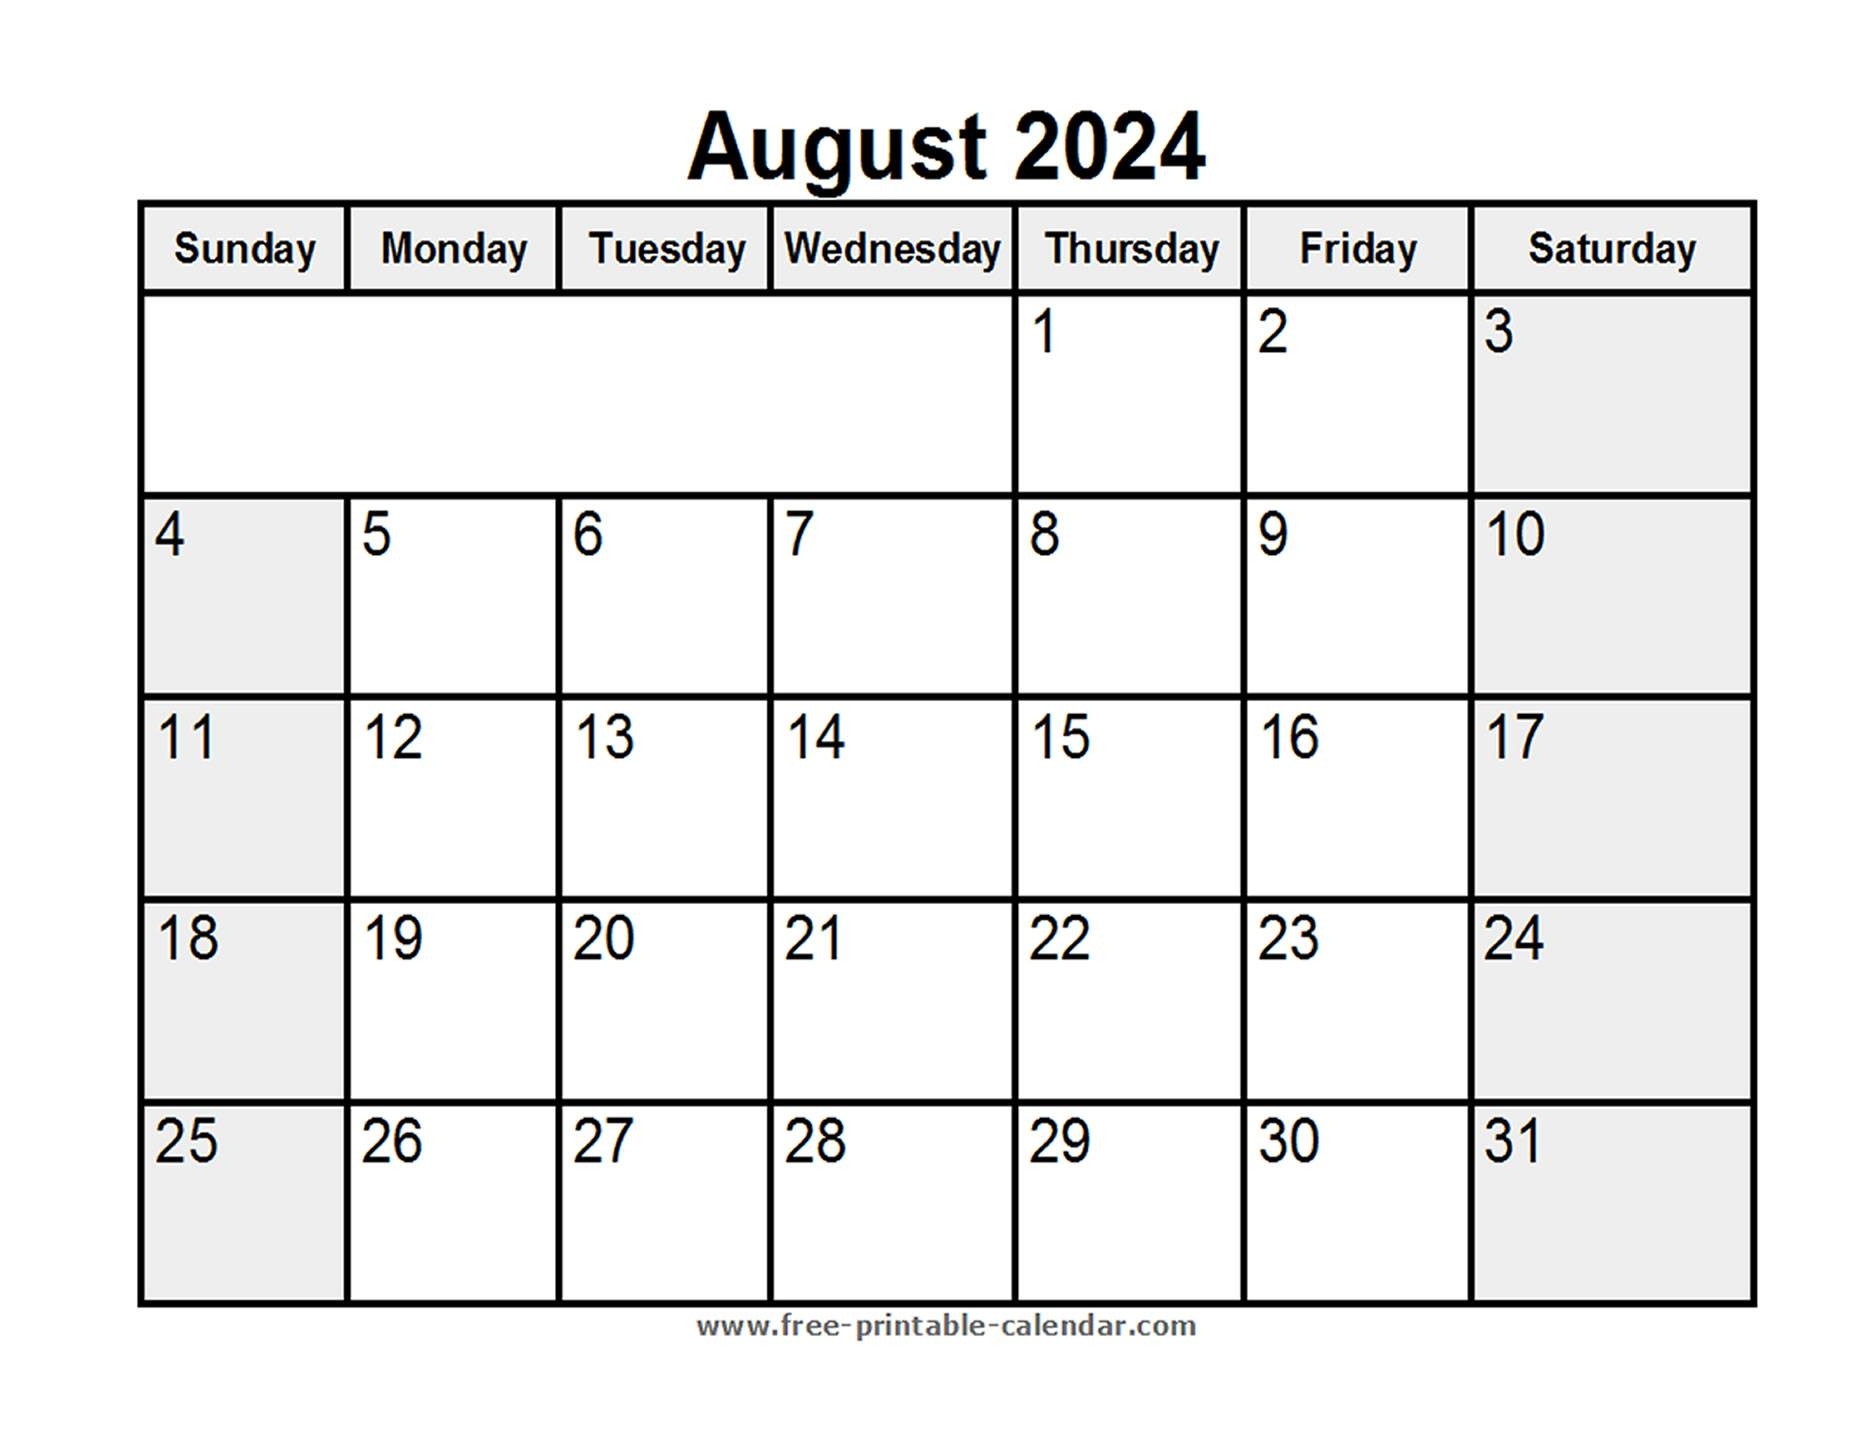 Printable August 2024 Calendar - Free-Printable-Calendar with regard to Free Printable Black And White August 2024 Calendar